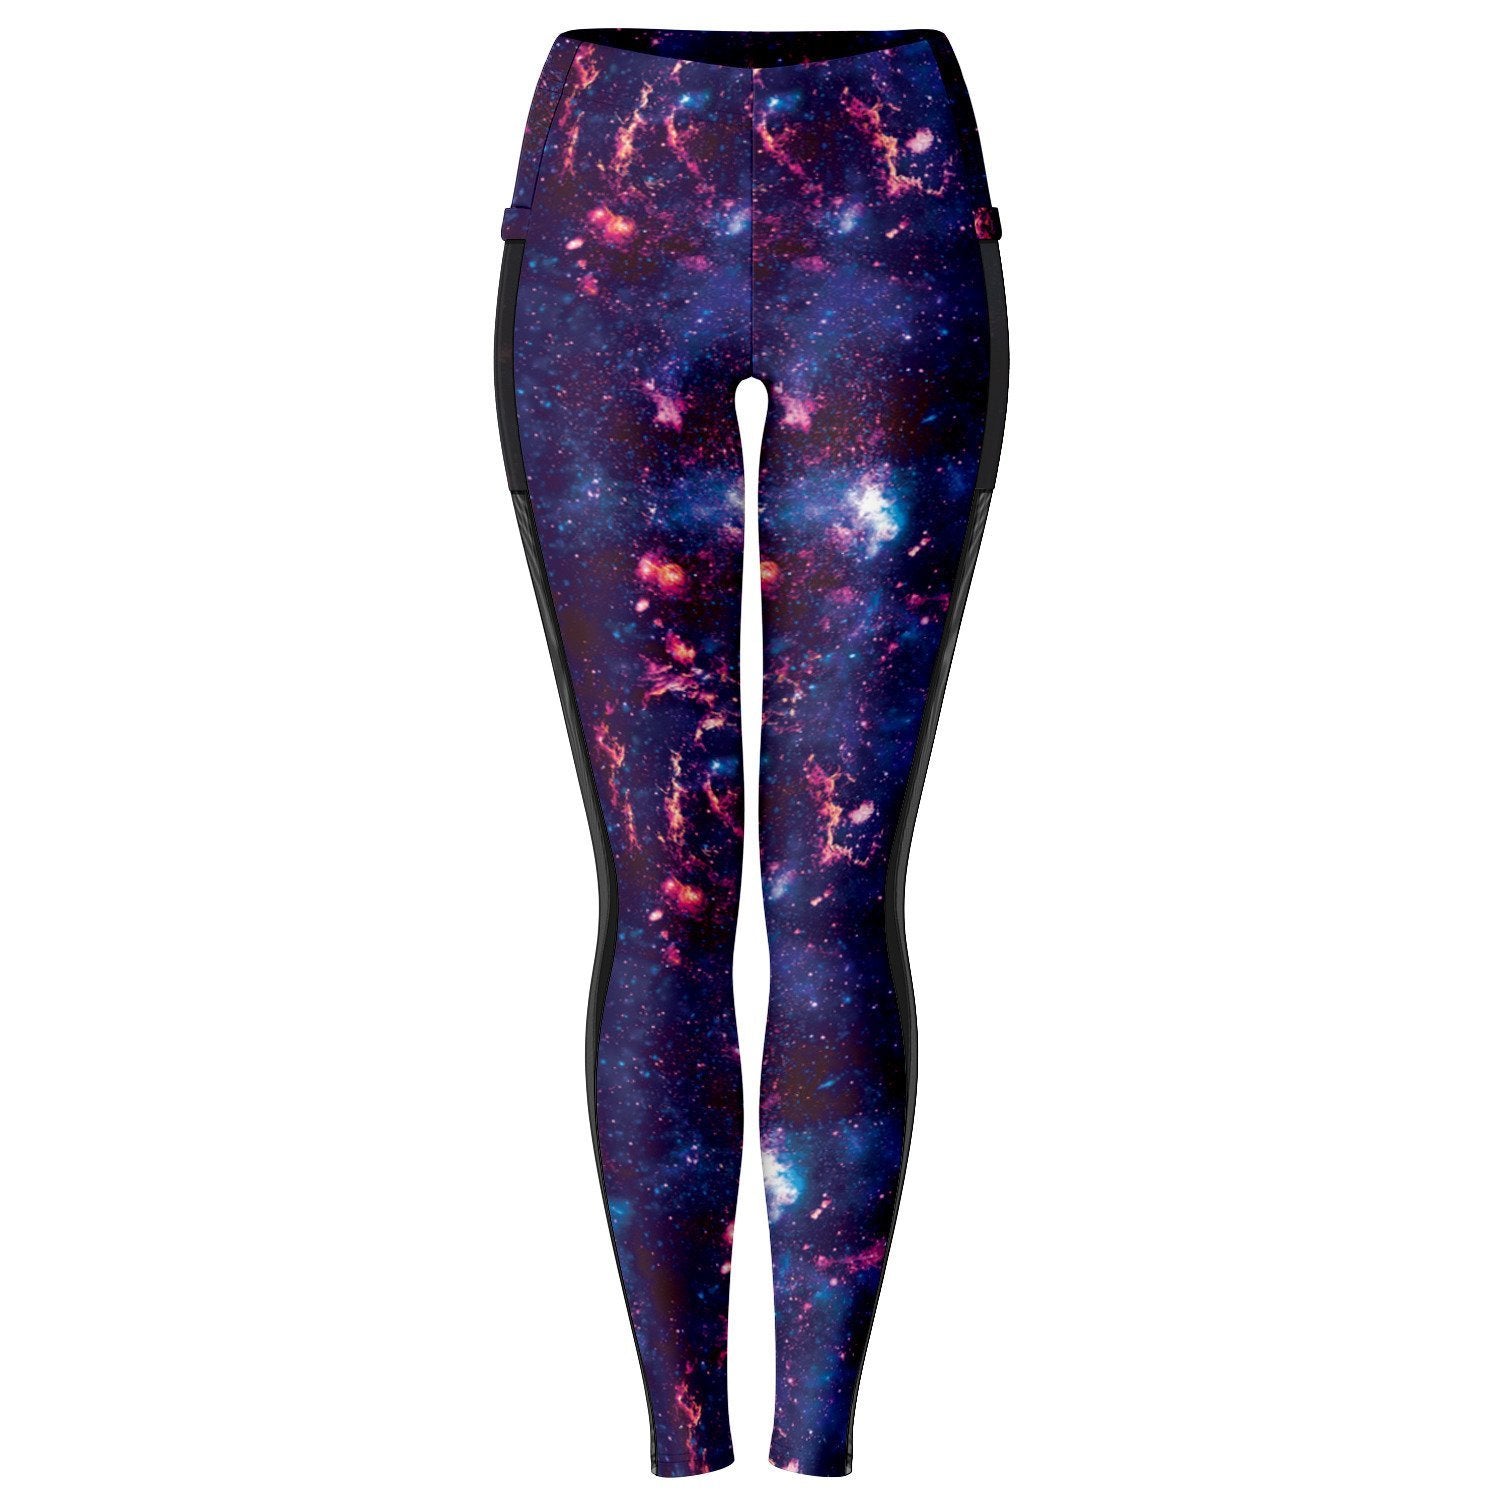 Shop Generic Kyku Galaxy Leggings Women Space 3d Print Universe